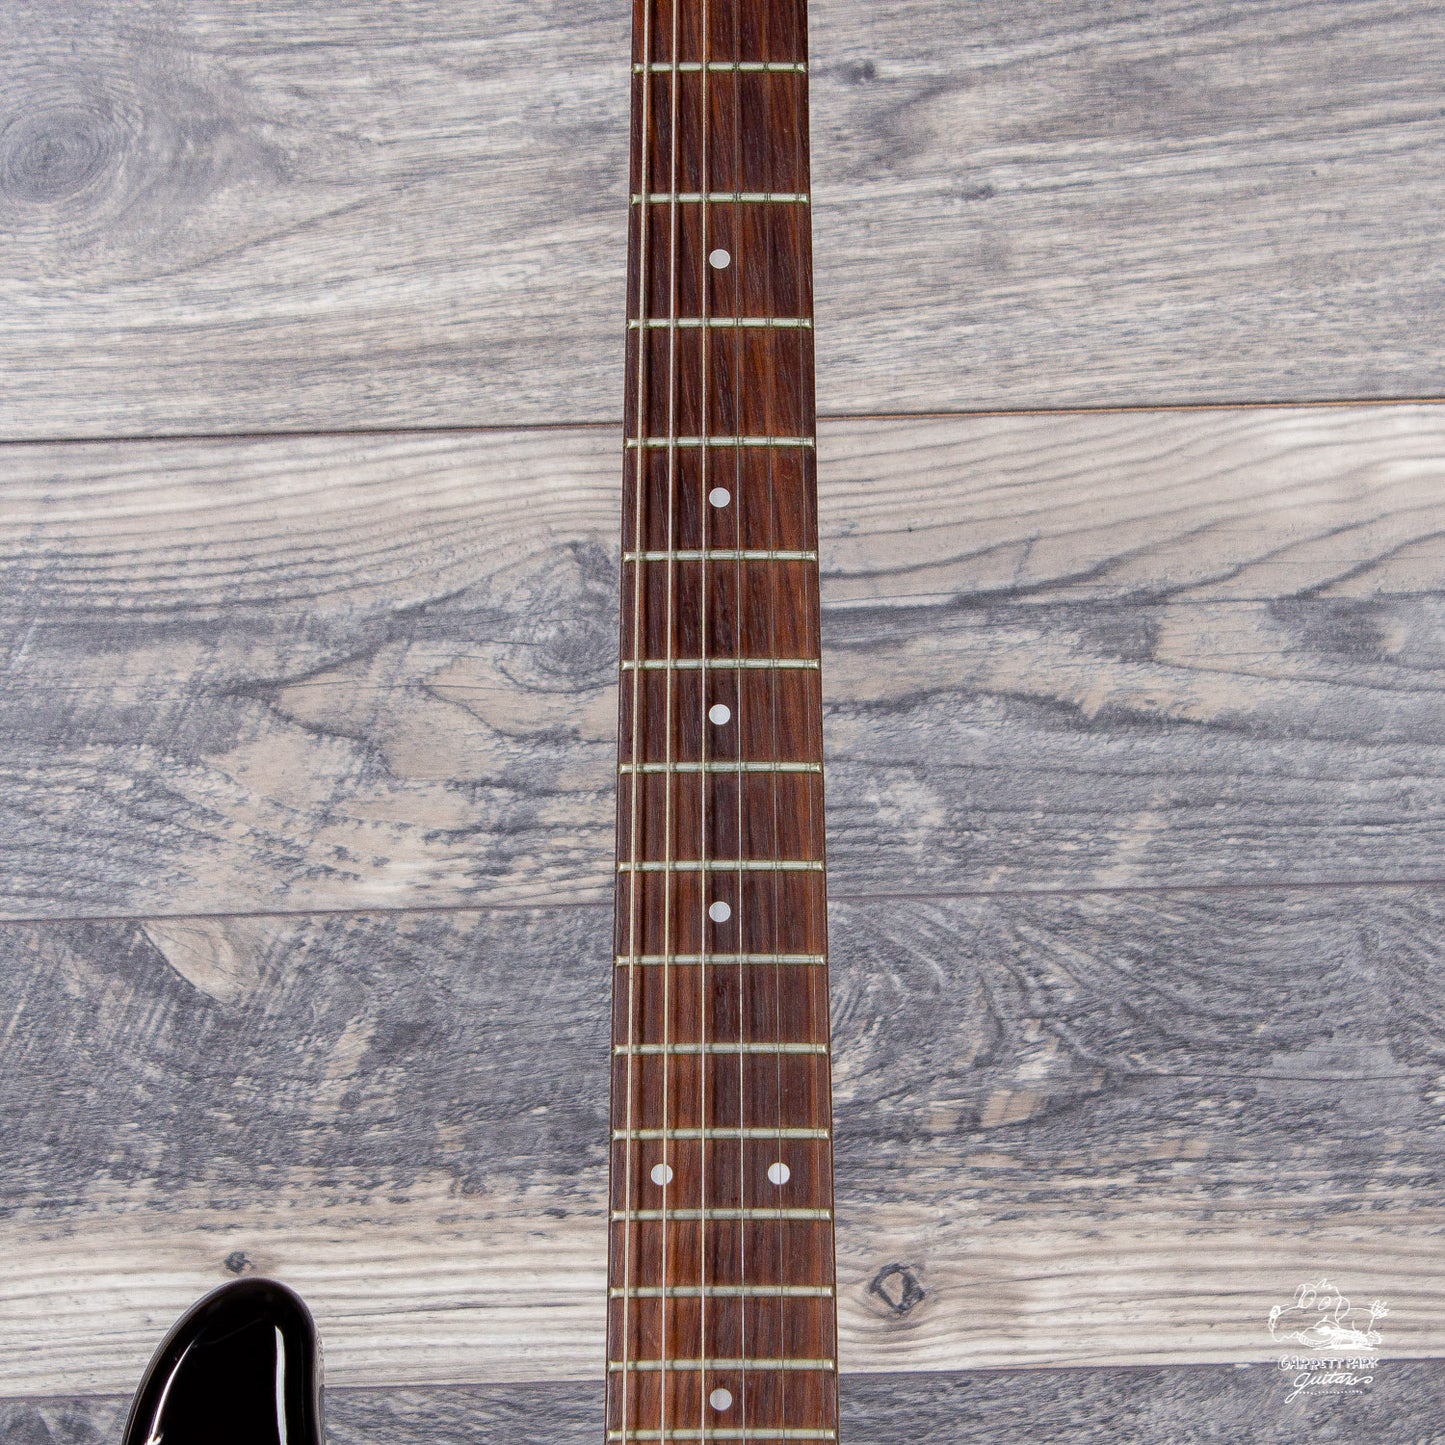 1988 Fender MIJ Contemporary Stratocaster - Schaller Locking Tremolo,- Sunburst - Lace Sensor Pickups